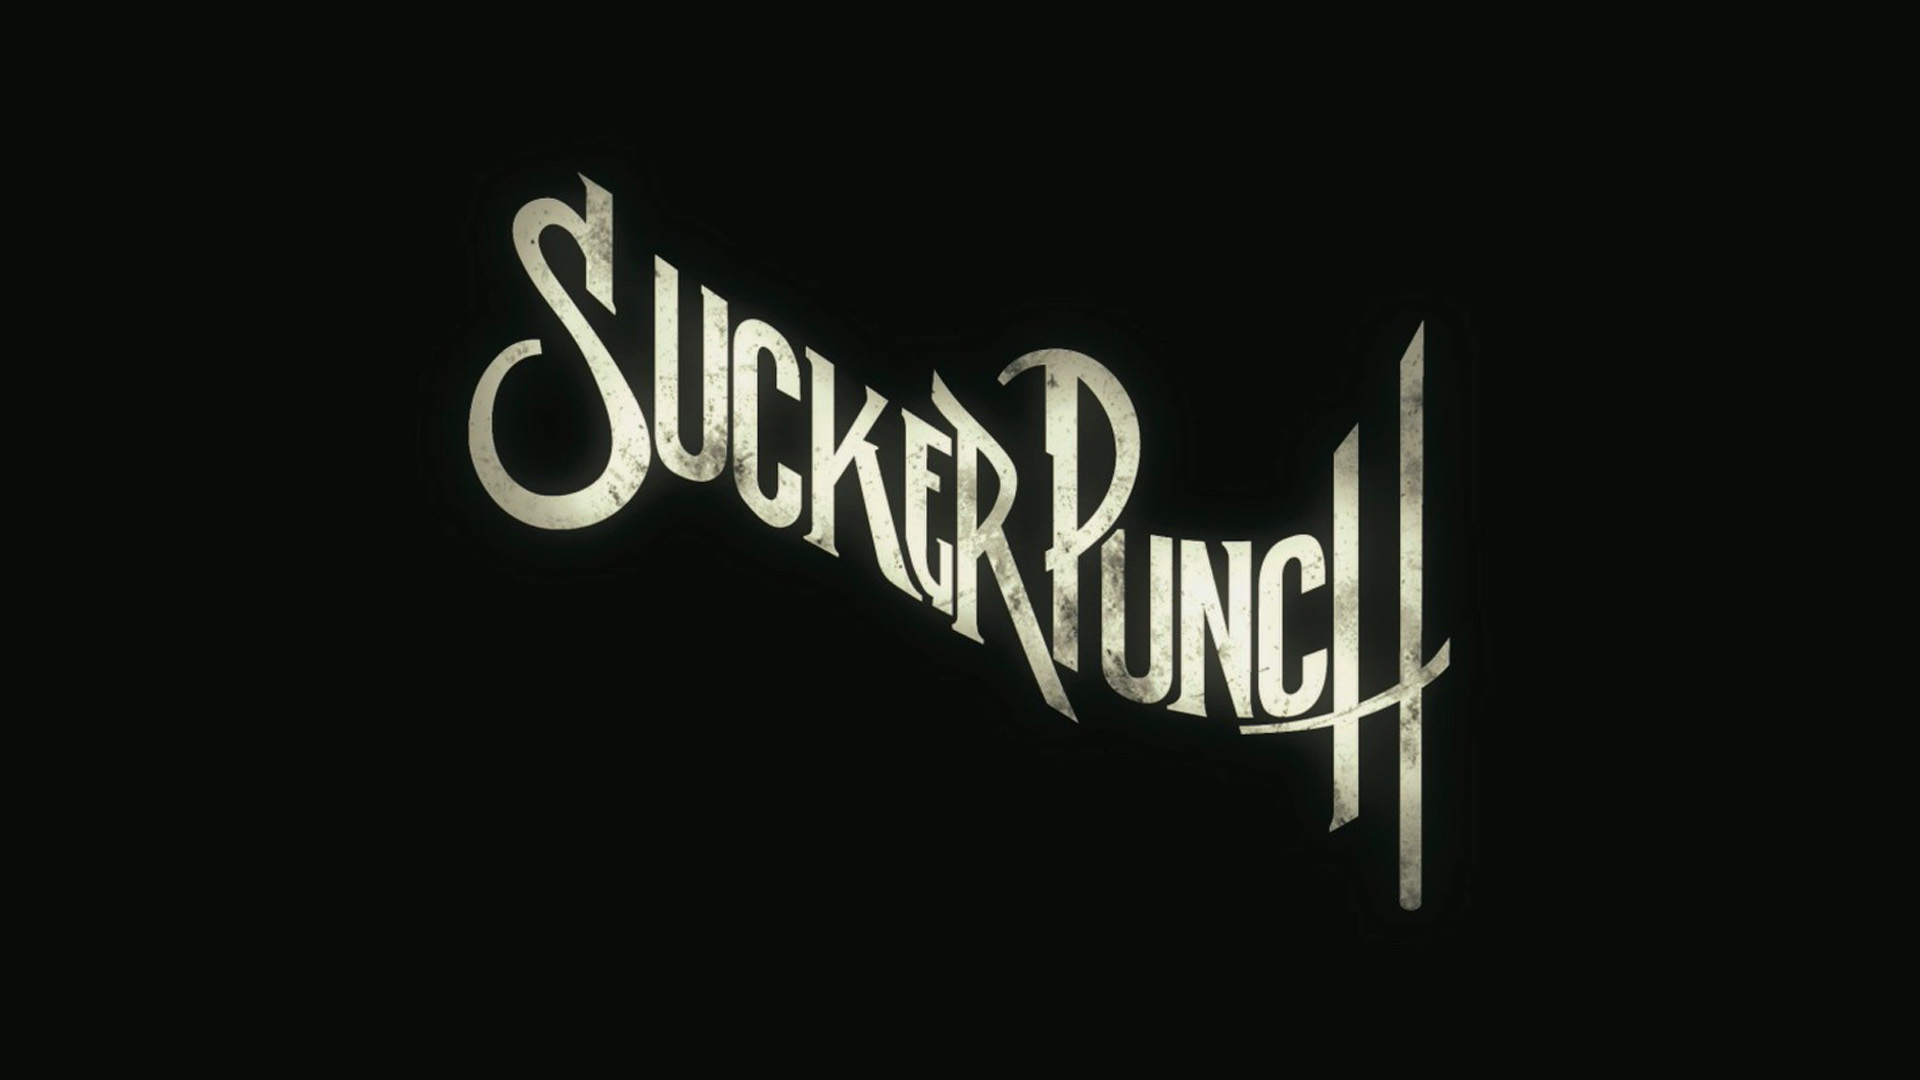 Sucker Punch Hd Wallpaper 